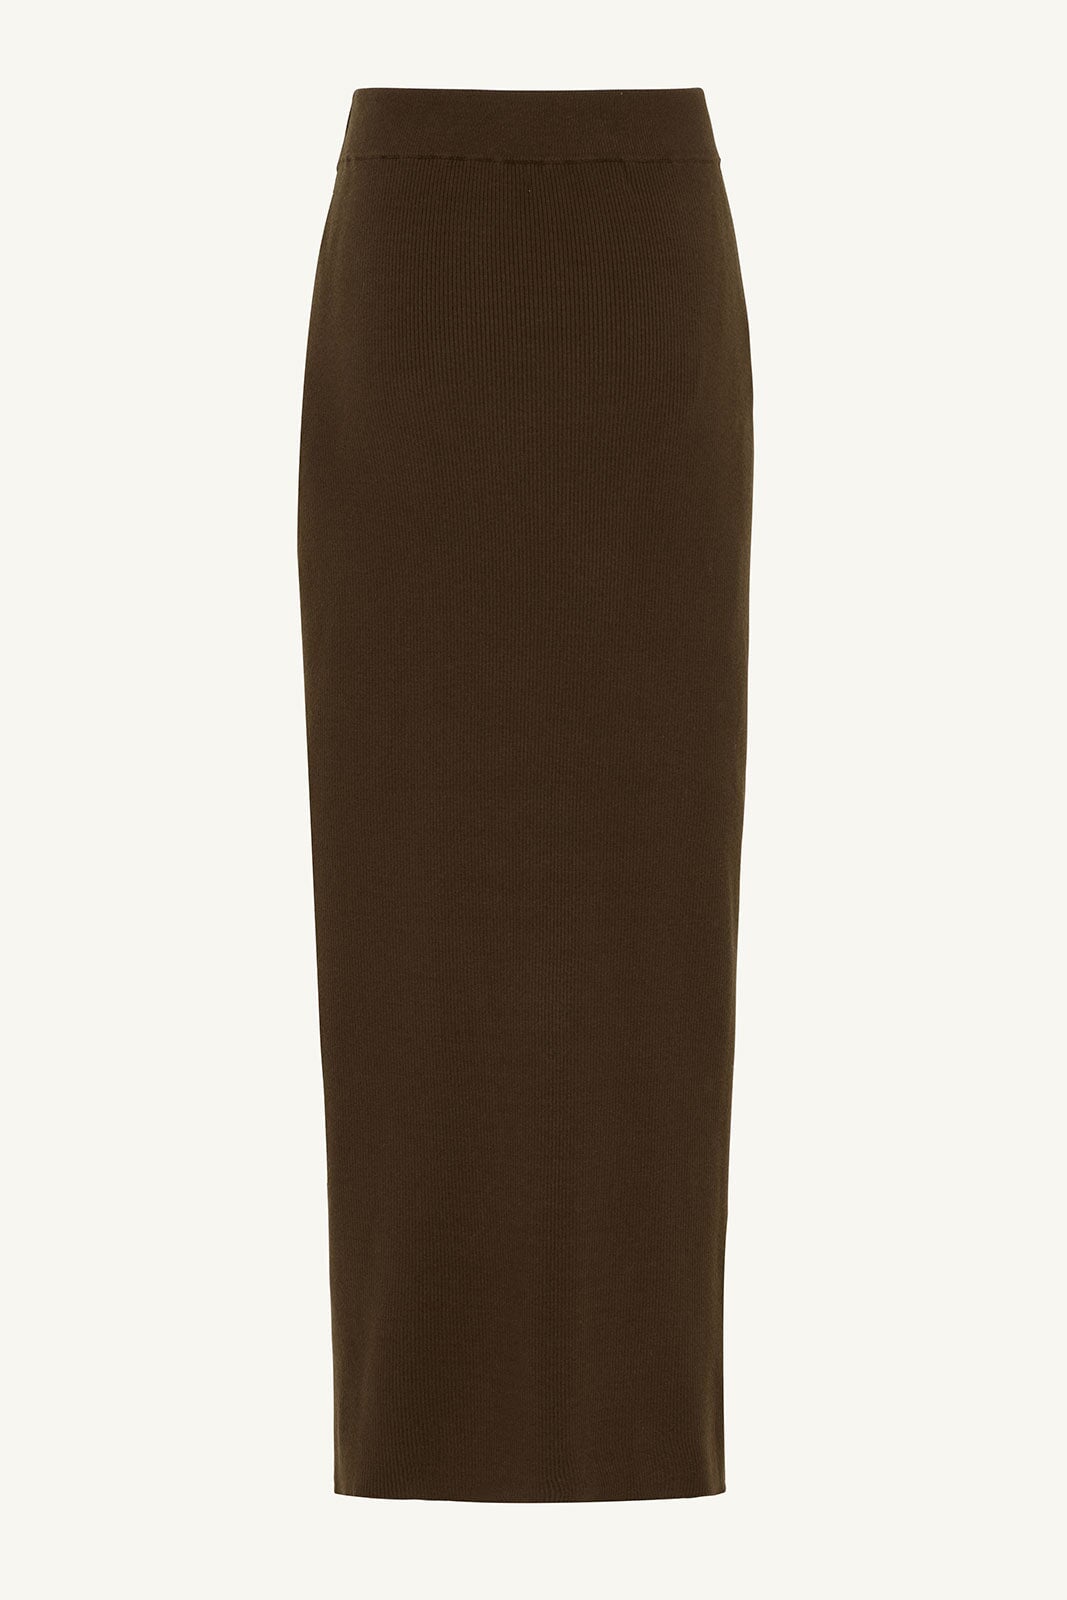 Alara Faux Wrap Knit Maxi Skirt - Chocolate Brown Clothing epschoolboard 